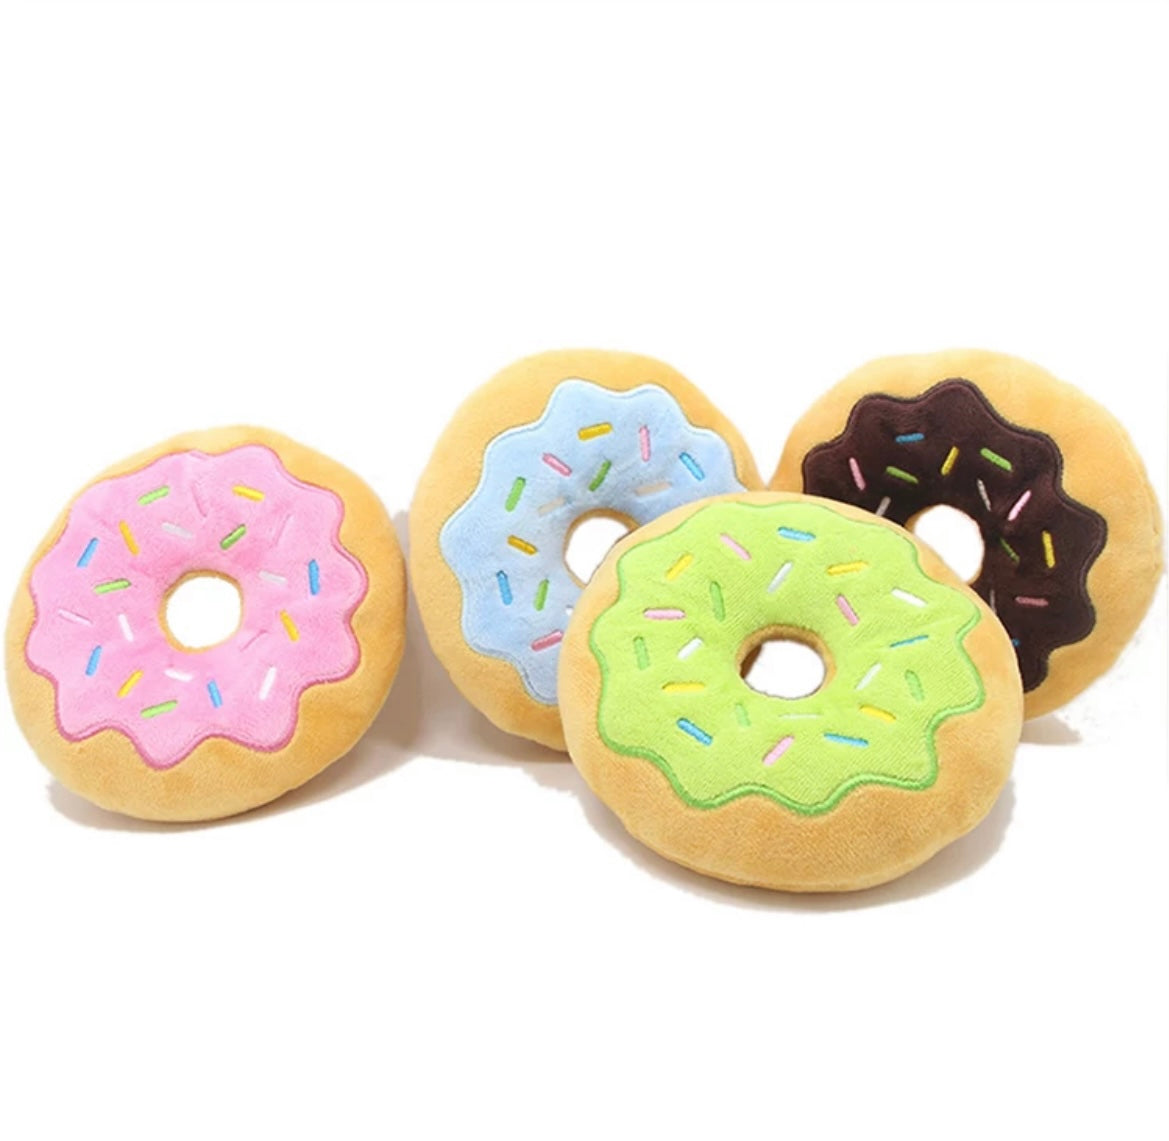 Paws N' Claws Boutique - Doughnut Plush Toy